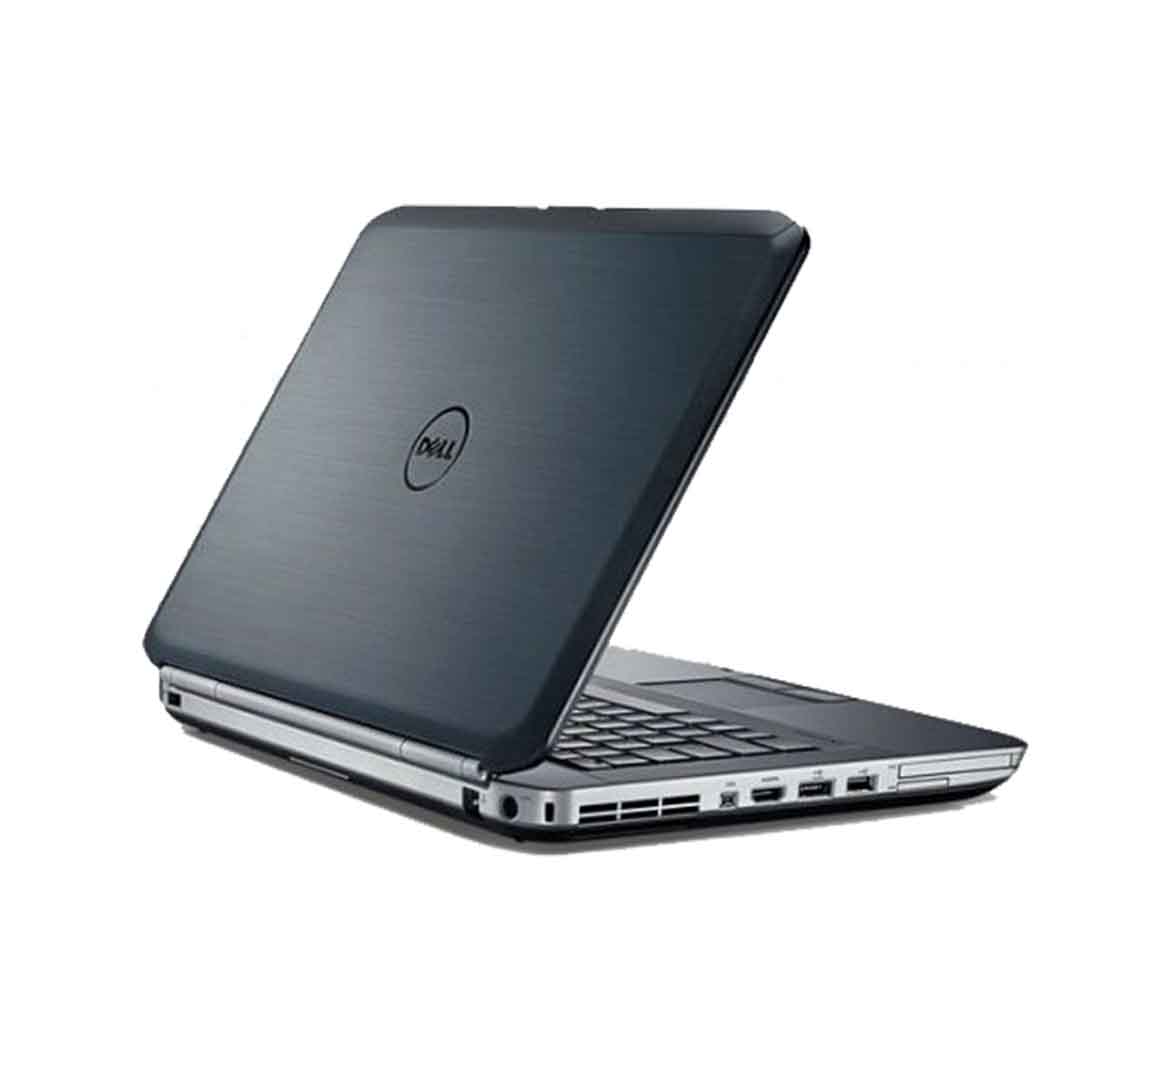 Dell Latitude E5420 Business Laptop, Intel Core i5-2nd Generation CPU, 4GB RAM, 500GB HDD, 14 inch Display, Windows 10 Pro, Refurbished Laptop